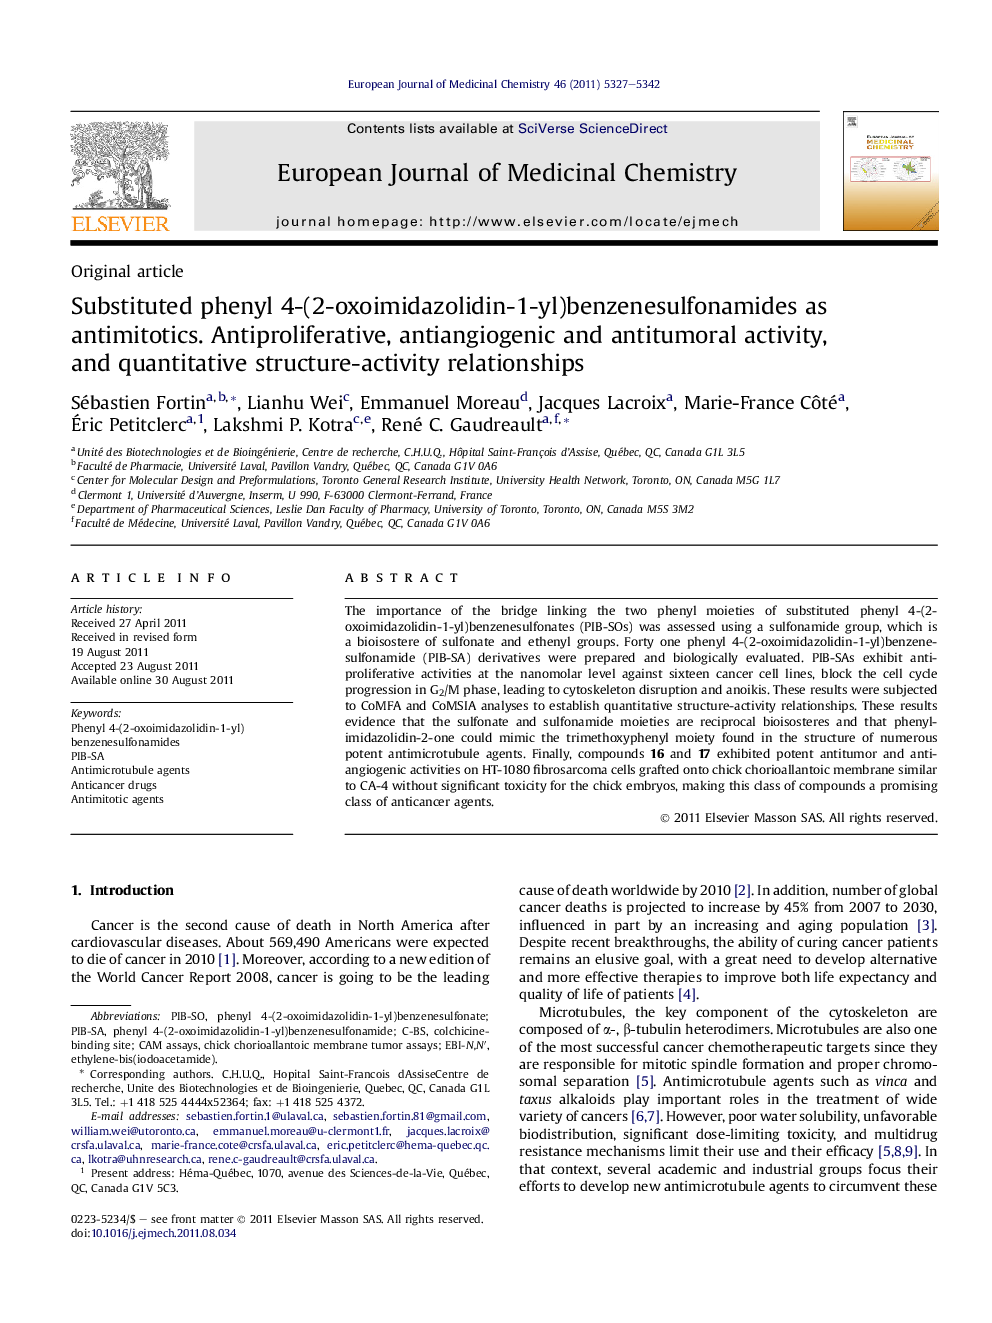 Substituted phenyl 4-(2-oxoimidazolidin-1-yl)benzenesulfonamides as antimitotics. Antiproliferative, antiangiogenic and antitumoral activity, and quantitative structure-activity relationships